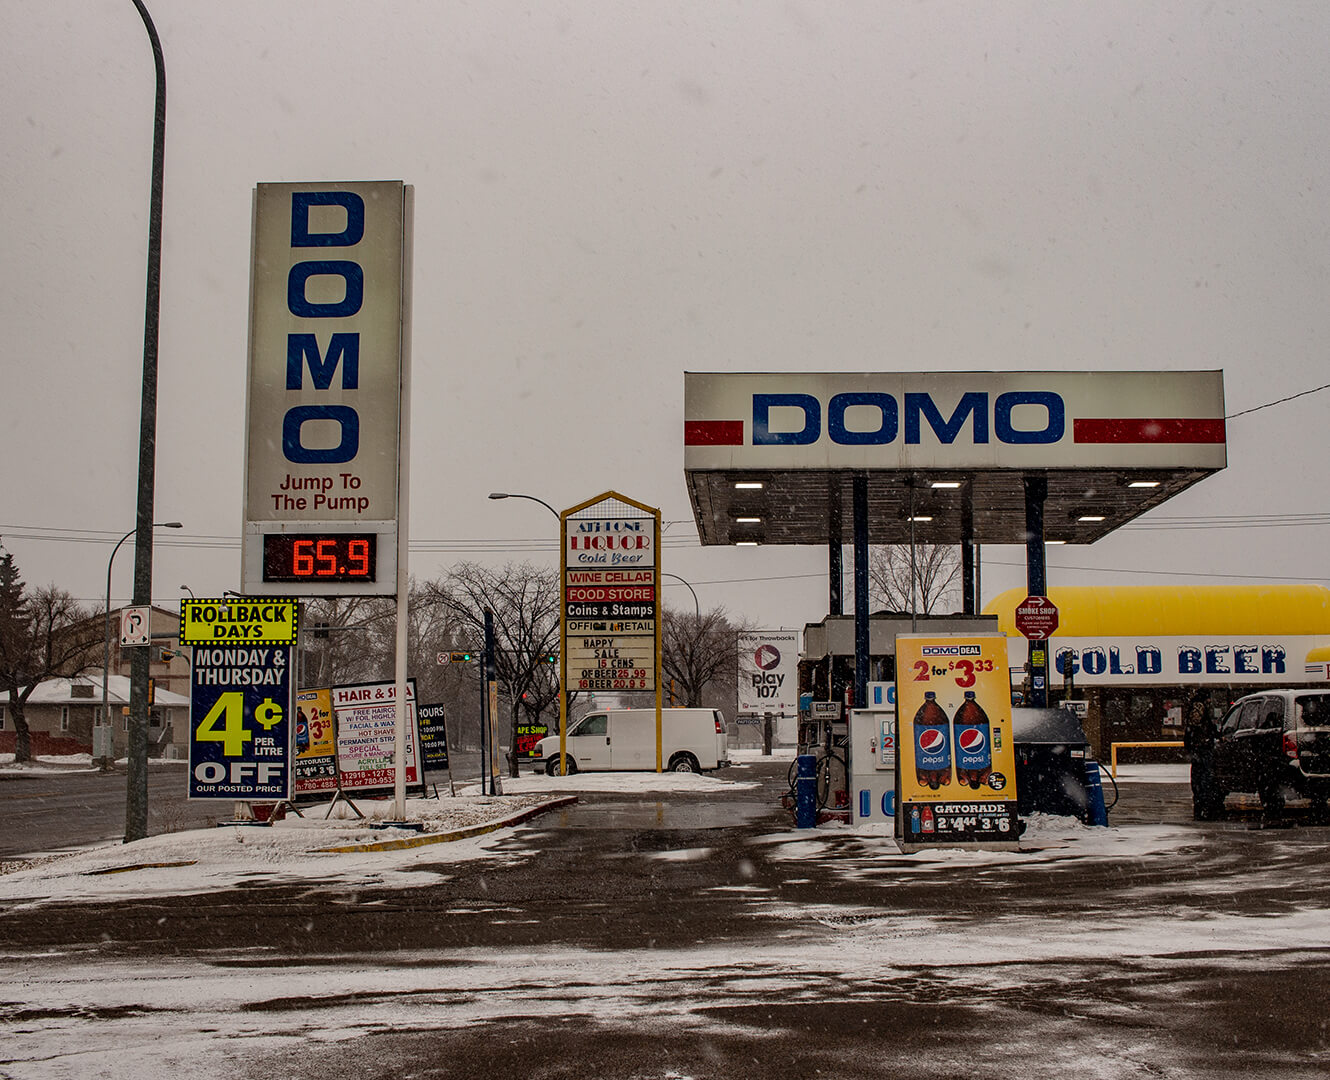 Domo gas station in Edmonton Alberta on cold winter day